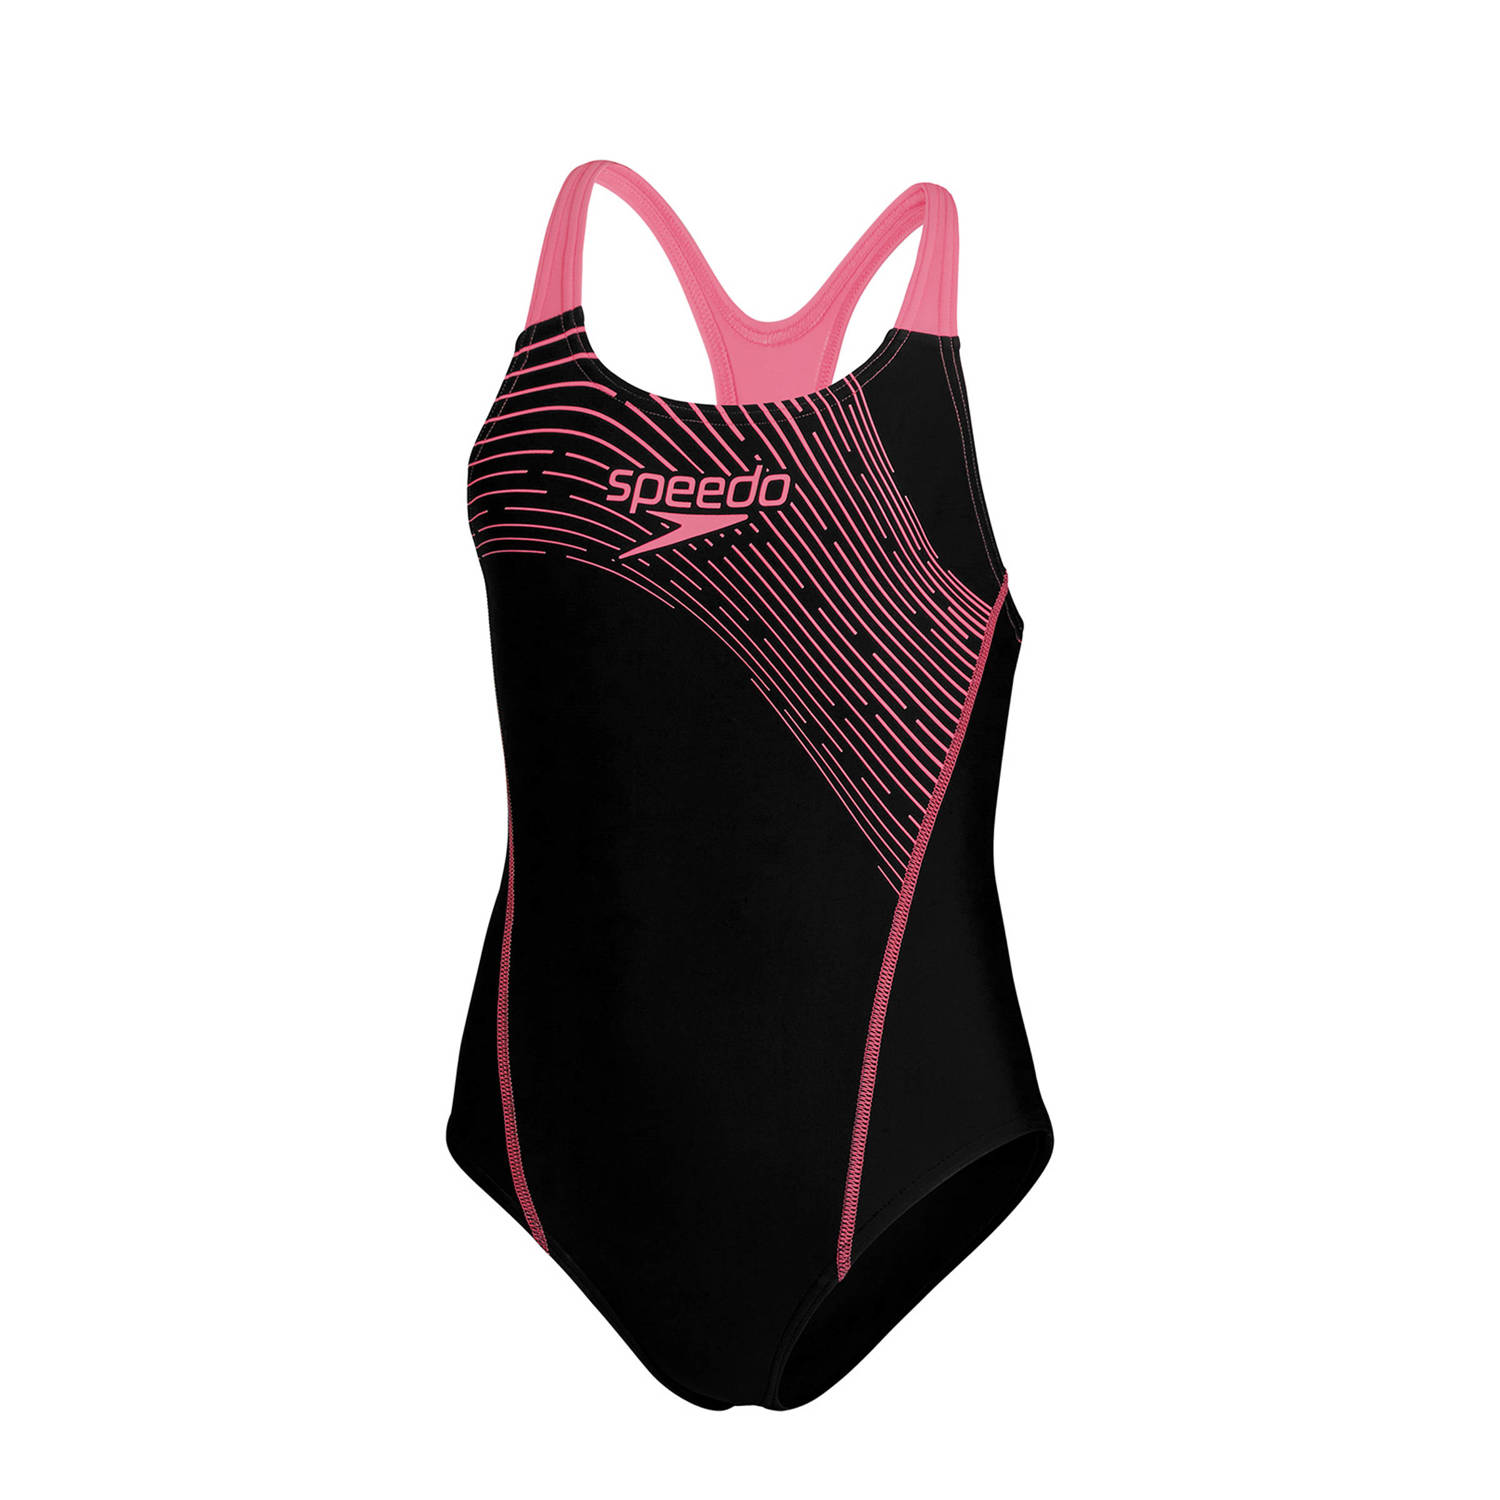 Speedo ECO EnduraFlex sportbadpak Medley medalist zwart roze